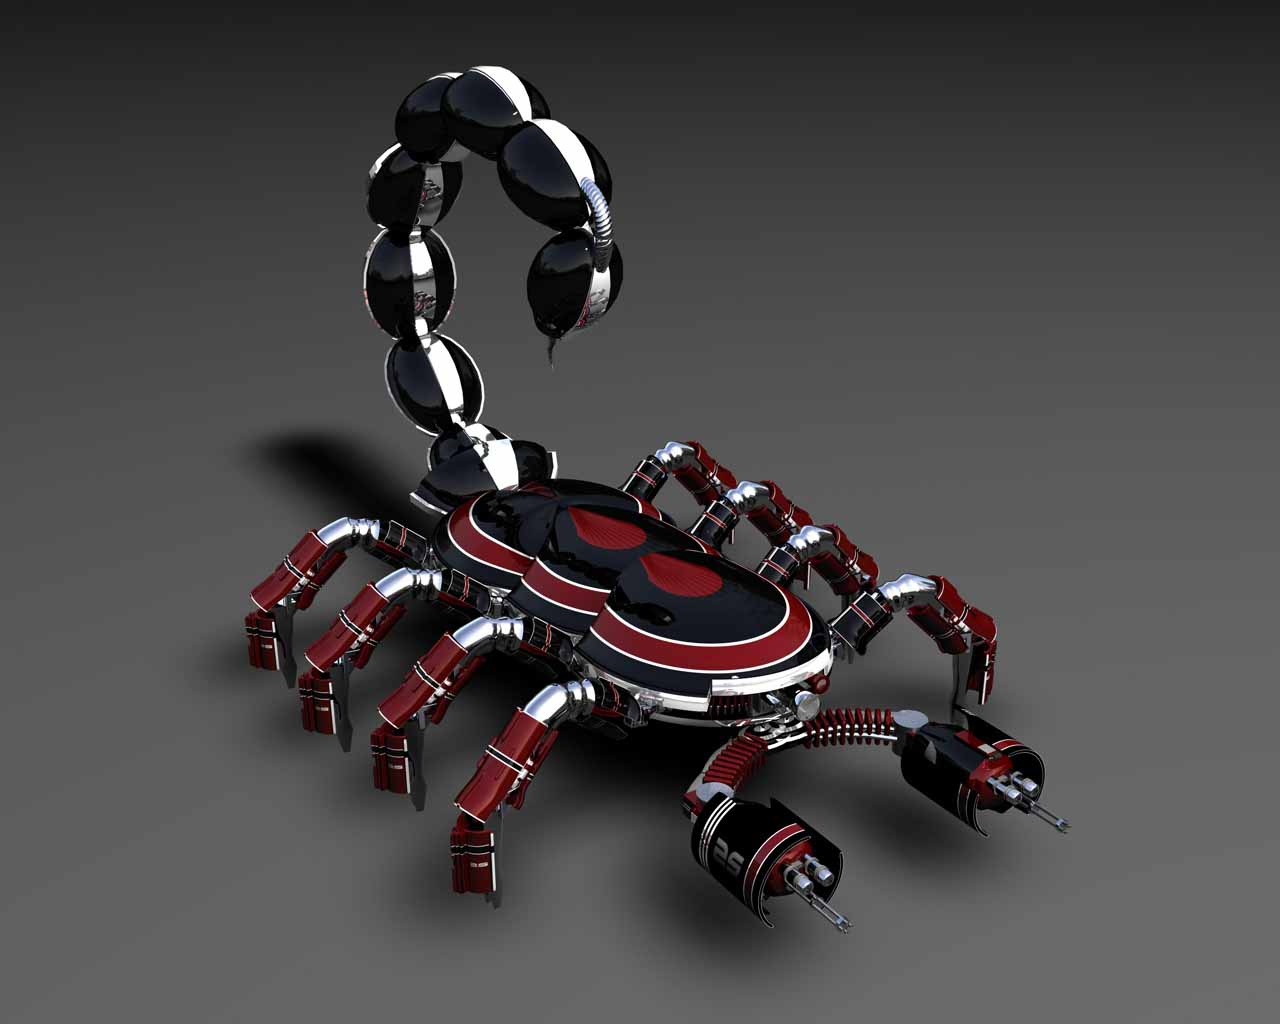 Scorpion Robot Photos Wallpaper